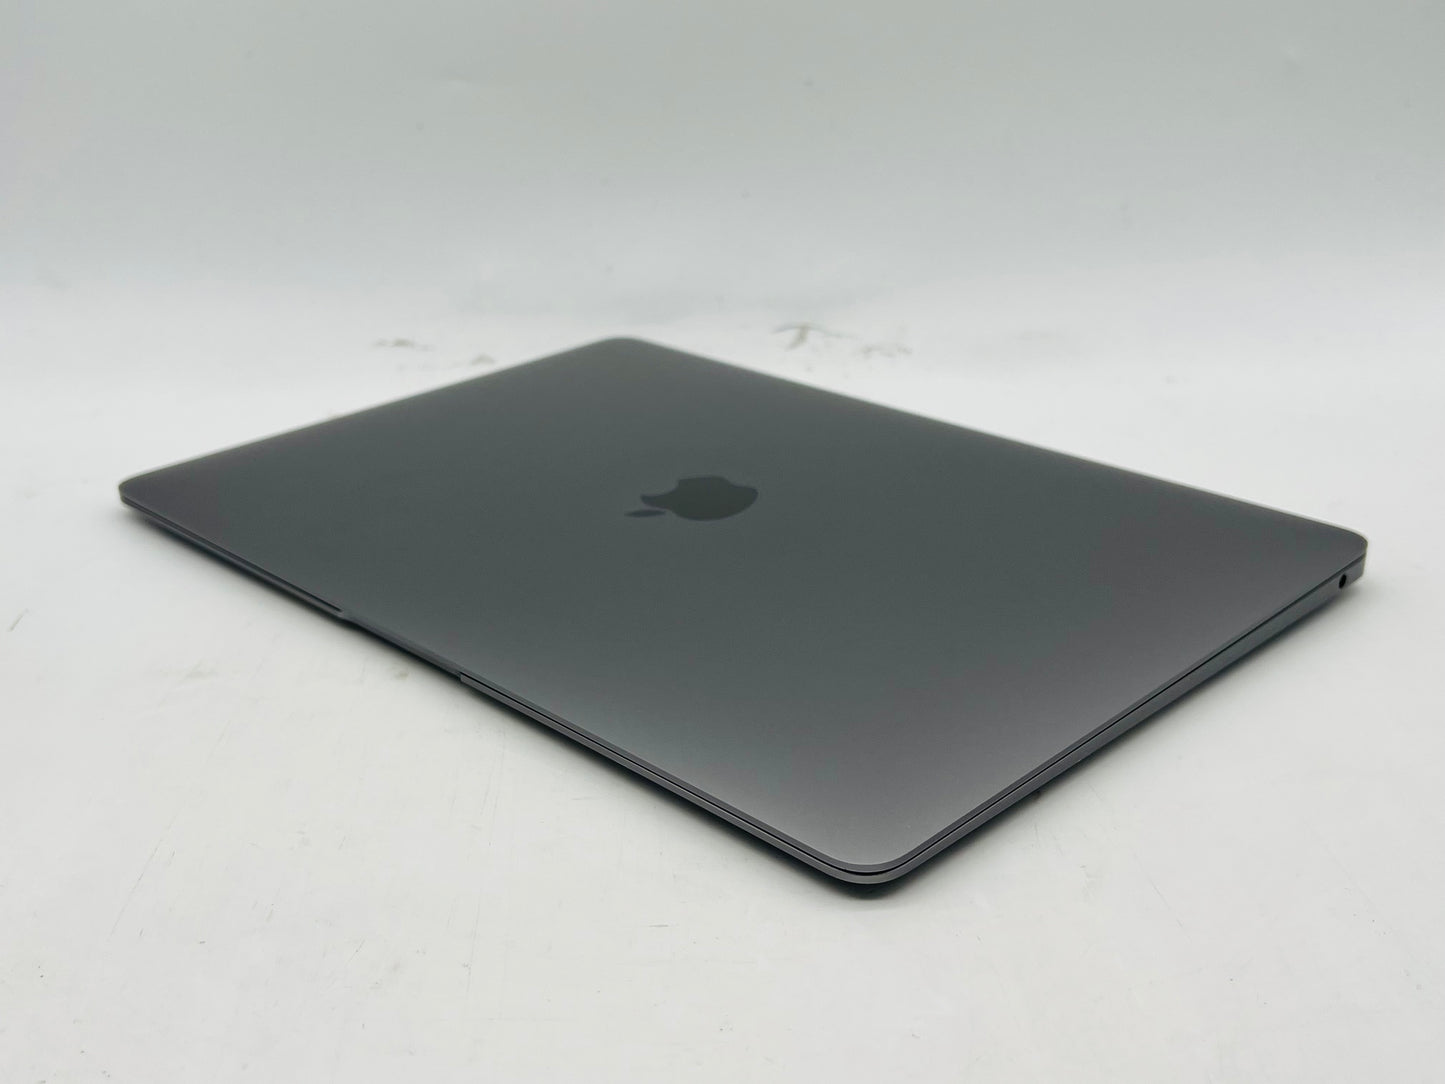 Apple 2019 MacBook Air 13 in 1.6GHz Dual-Core i5 16GB RAM 512GB SSD IUG 617